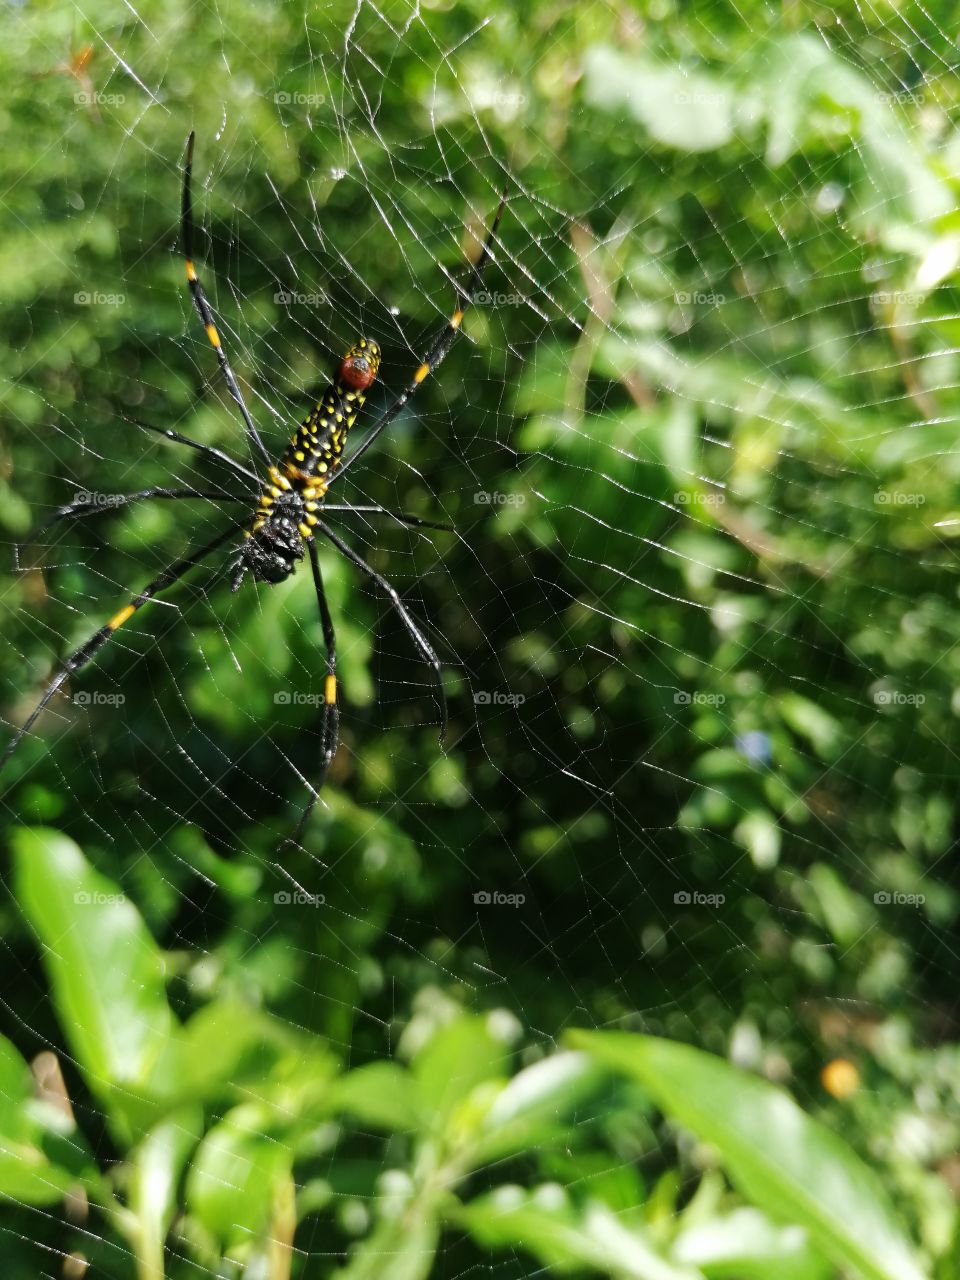 Garden spider on Web with green background.